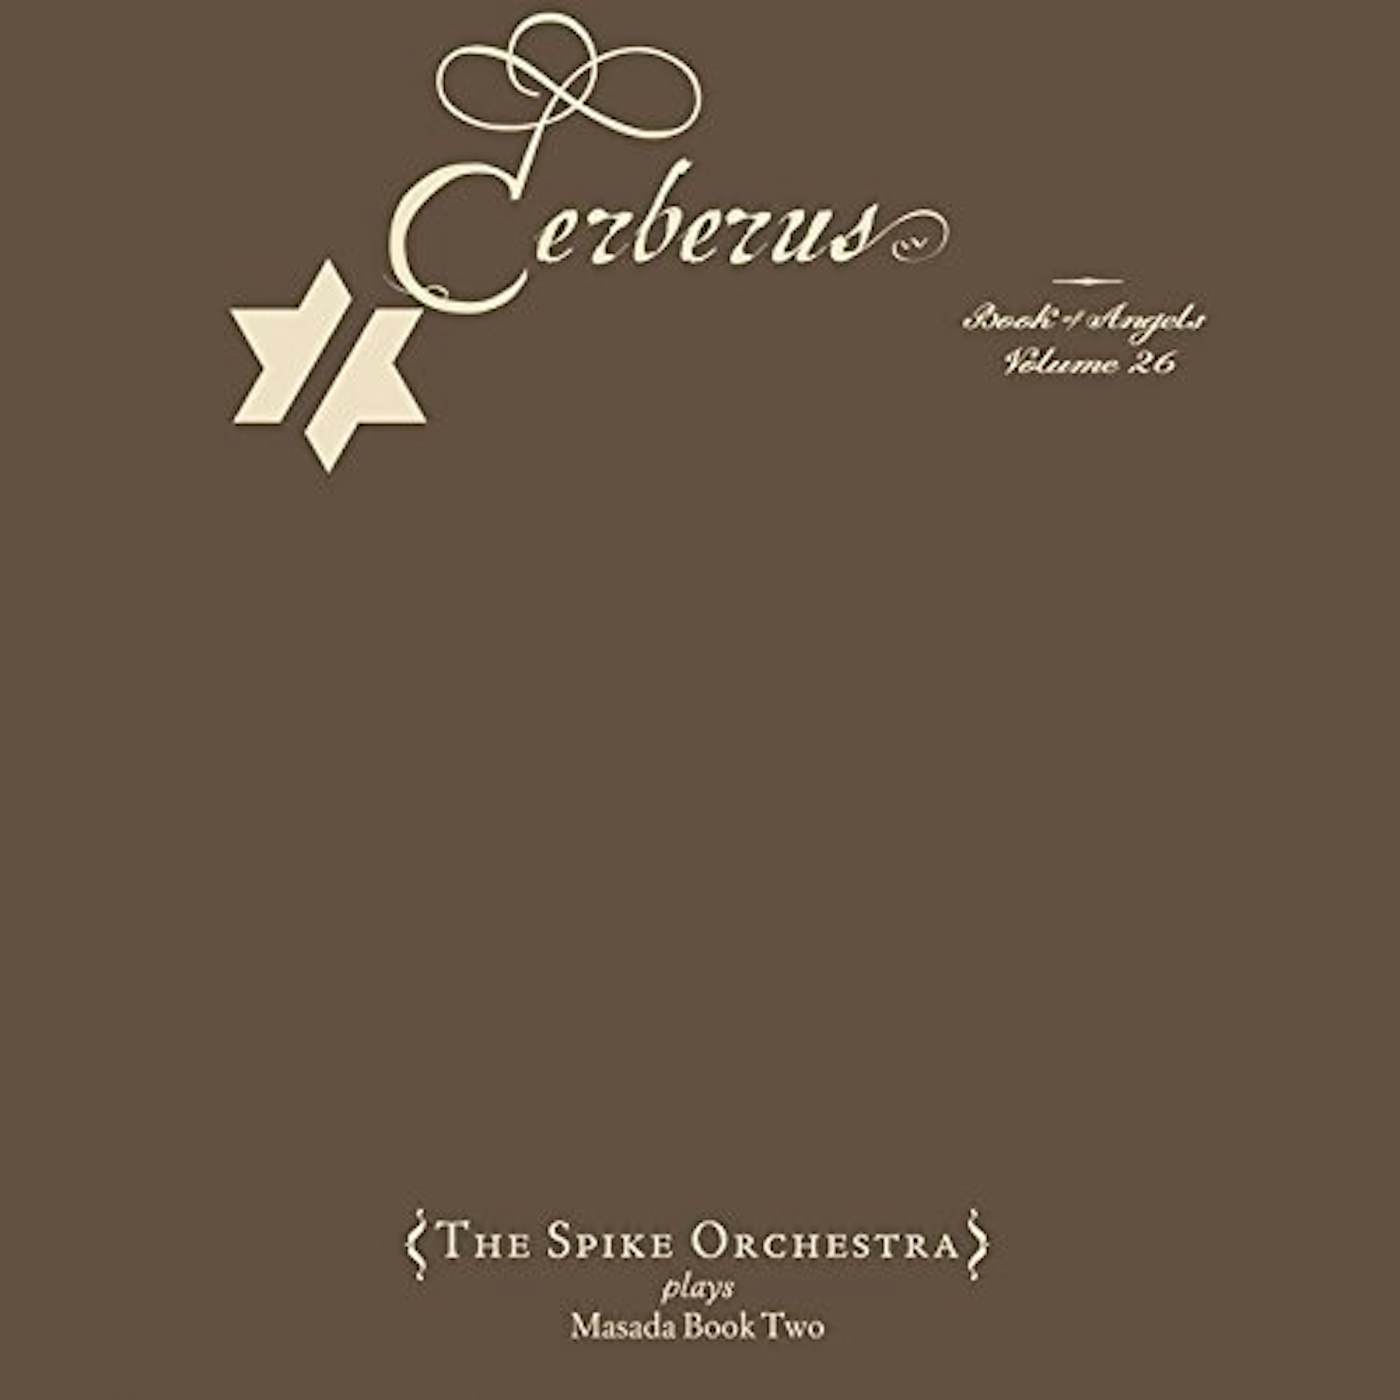 John Zorn CERBERUS: THE BOOK OF ANGELS VOLUME 26 CD